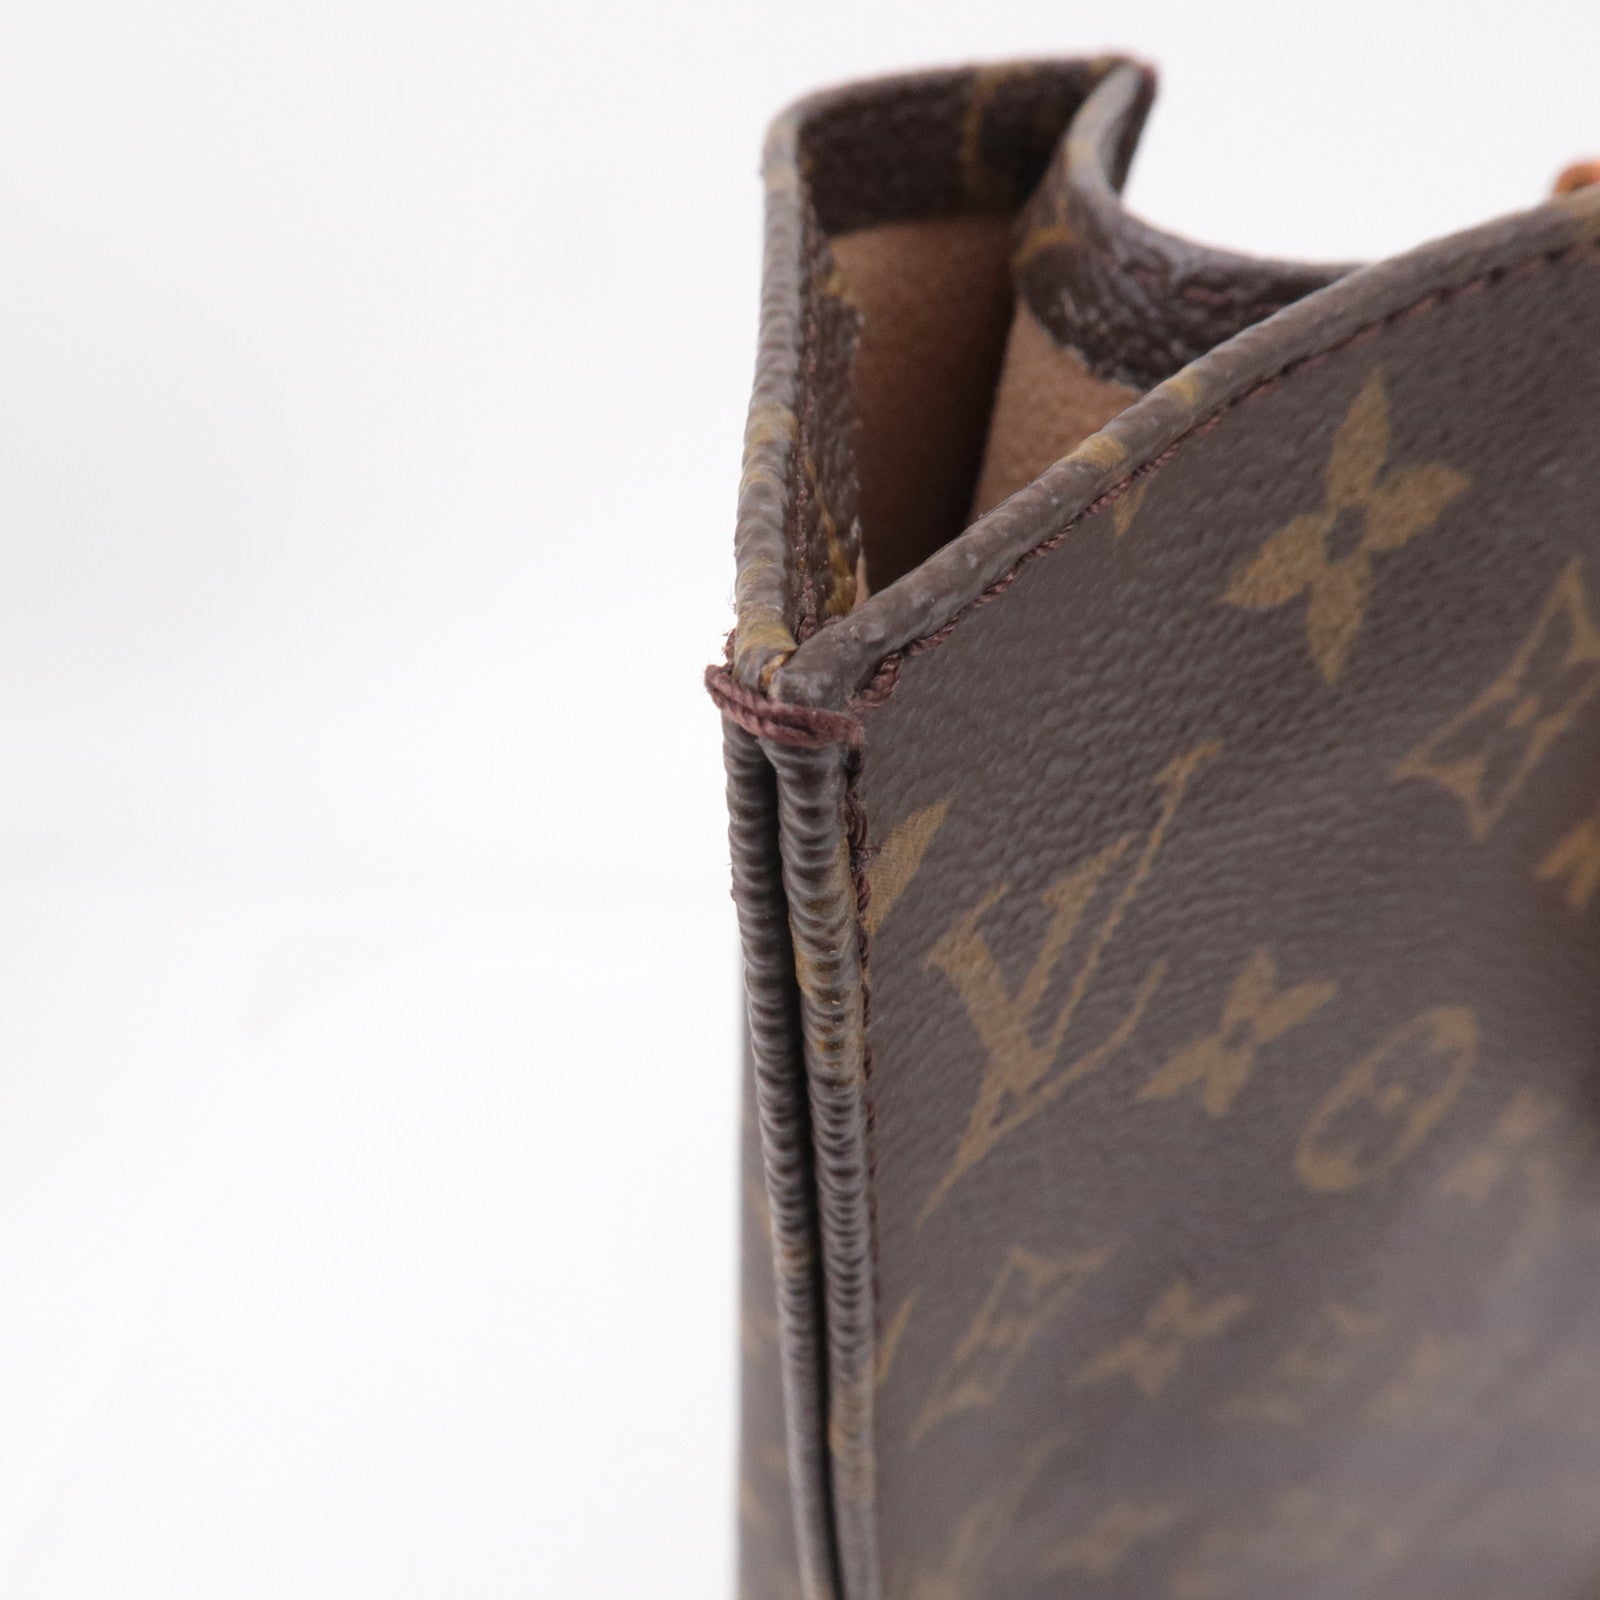 Authentic Louis Vuitton Tote Bag Sac Plat Brown Monogram M51140